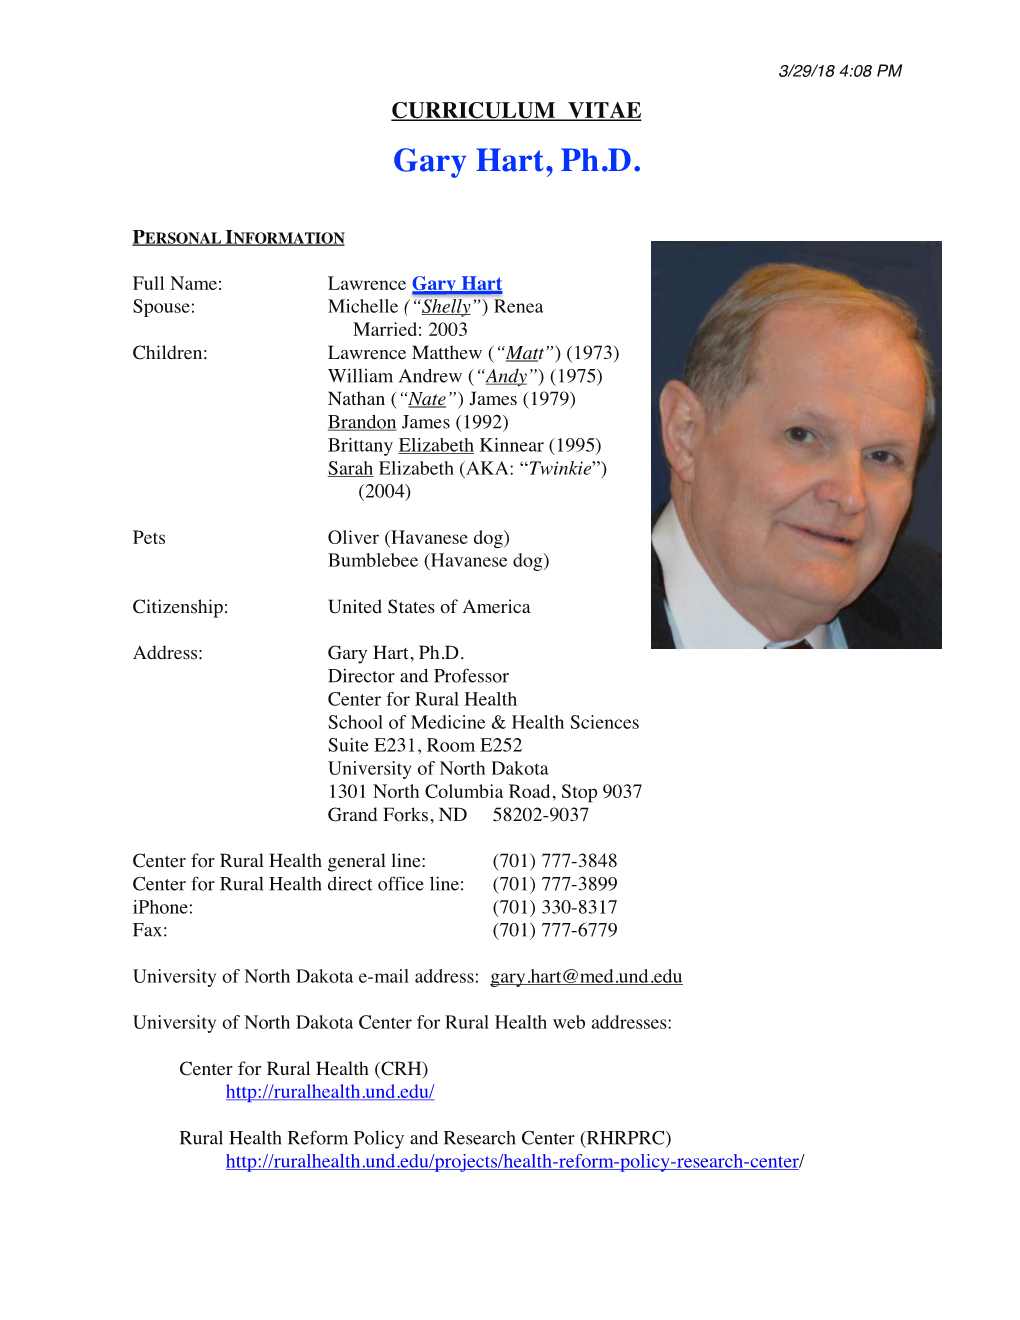 CURRICULUM VITAE Gary Hart, Ph.D